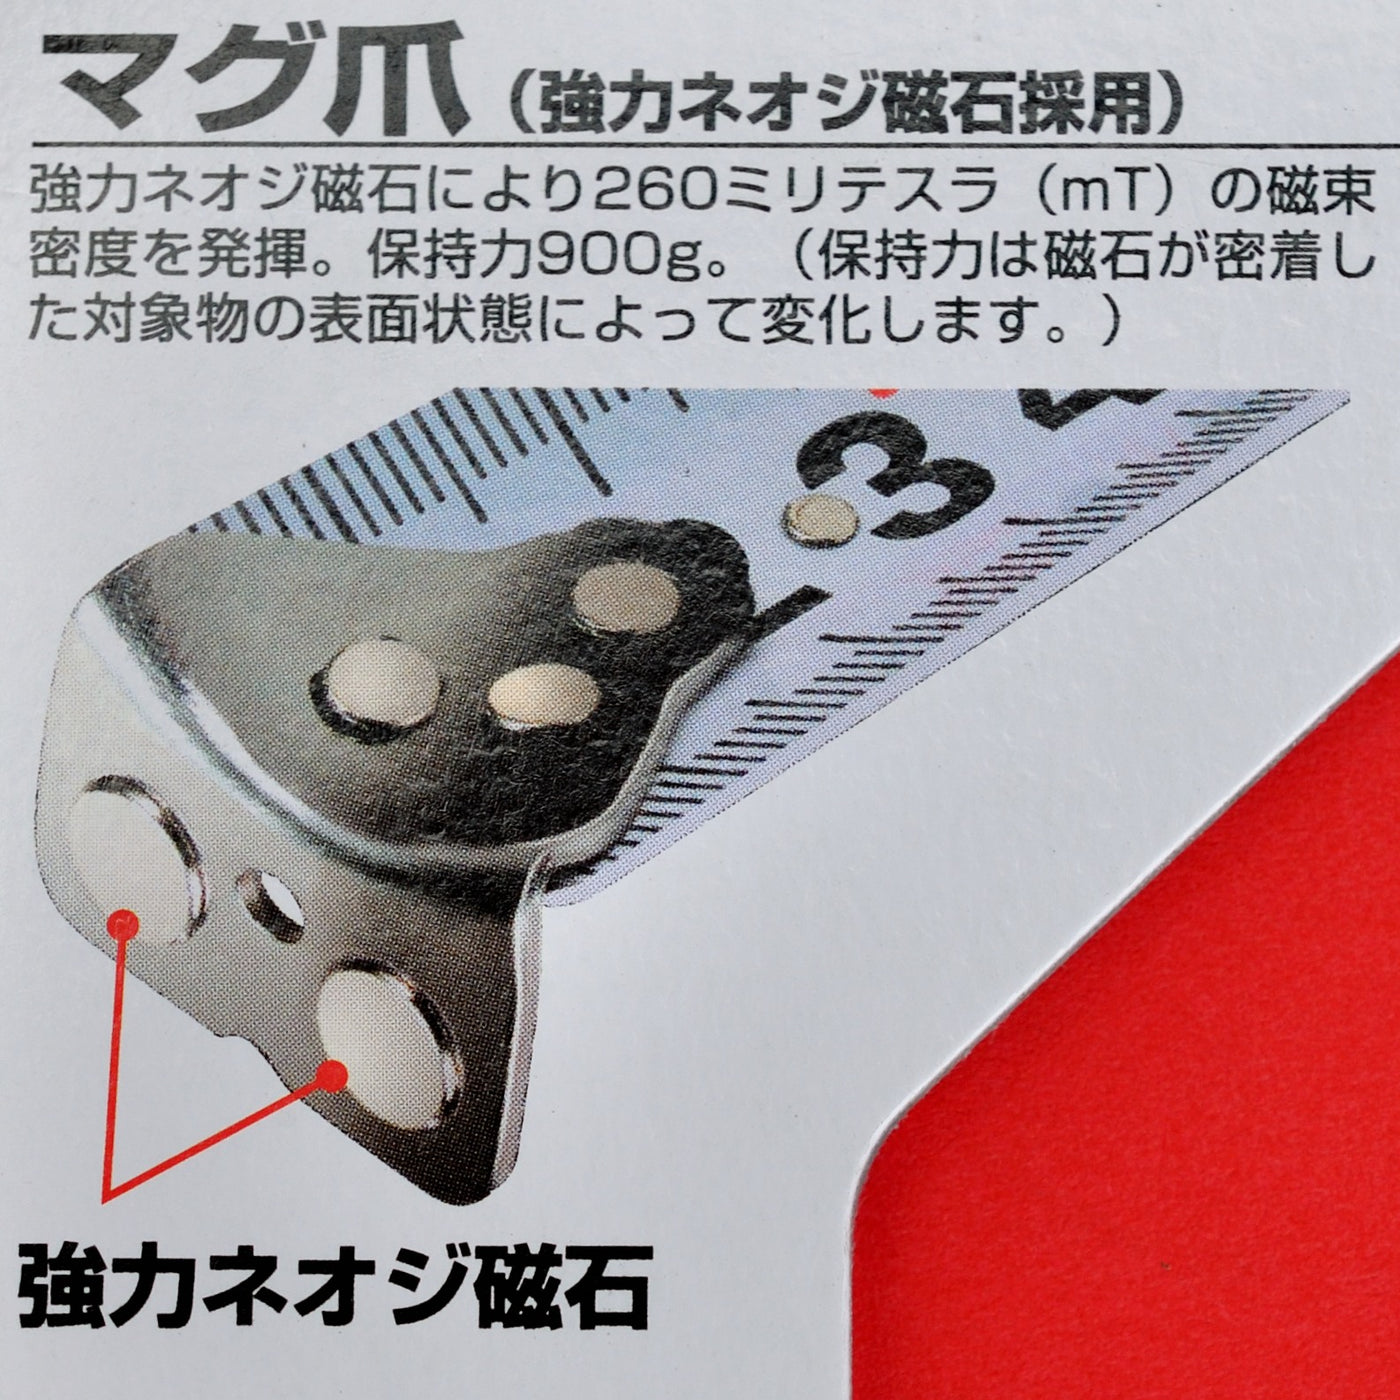 Tajima Tape Measure 5 M 3 M 7.5 M Ruler Double-Sided High Precision Steel  Tap Japanese Non-Slip Wear-Resistant Tape Measure Genuine